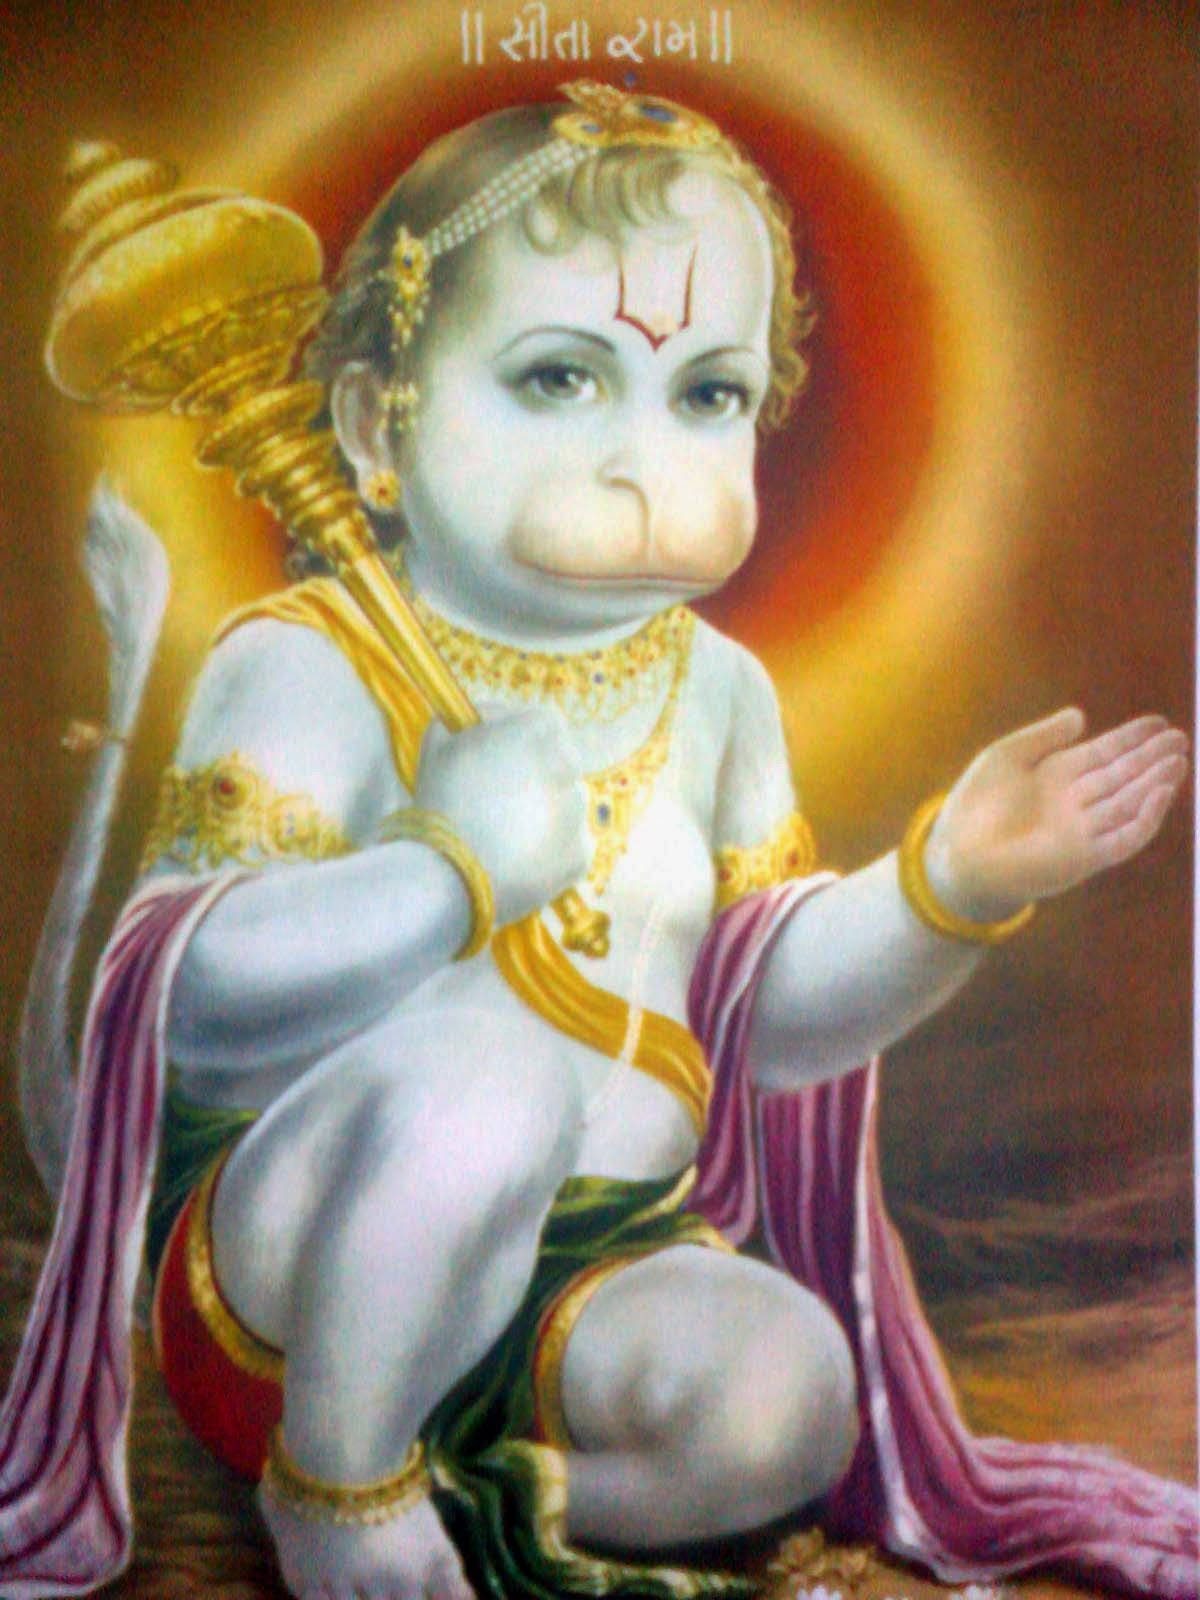 Baby Hanuman Monkey Face